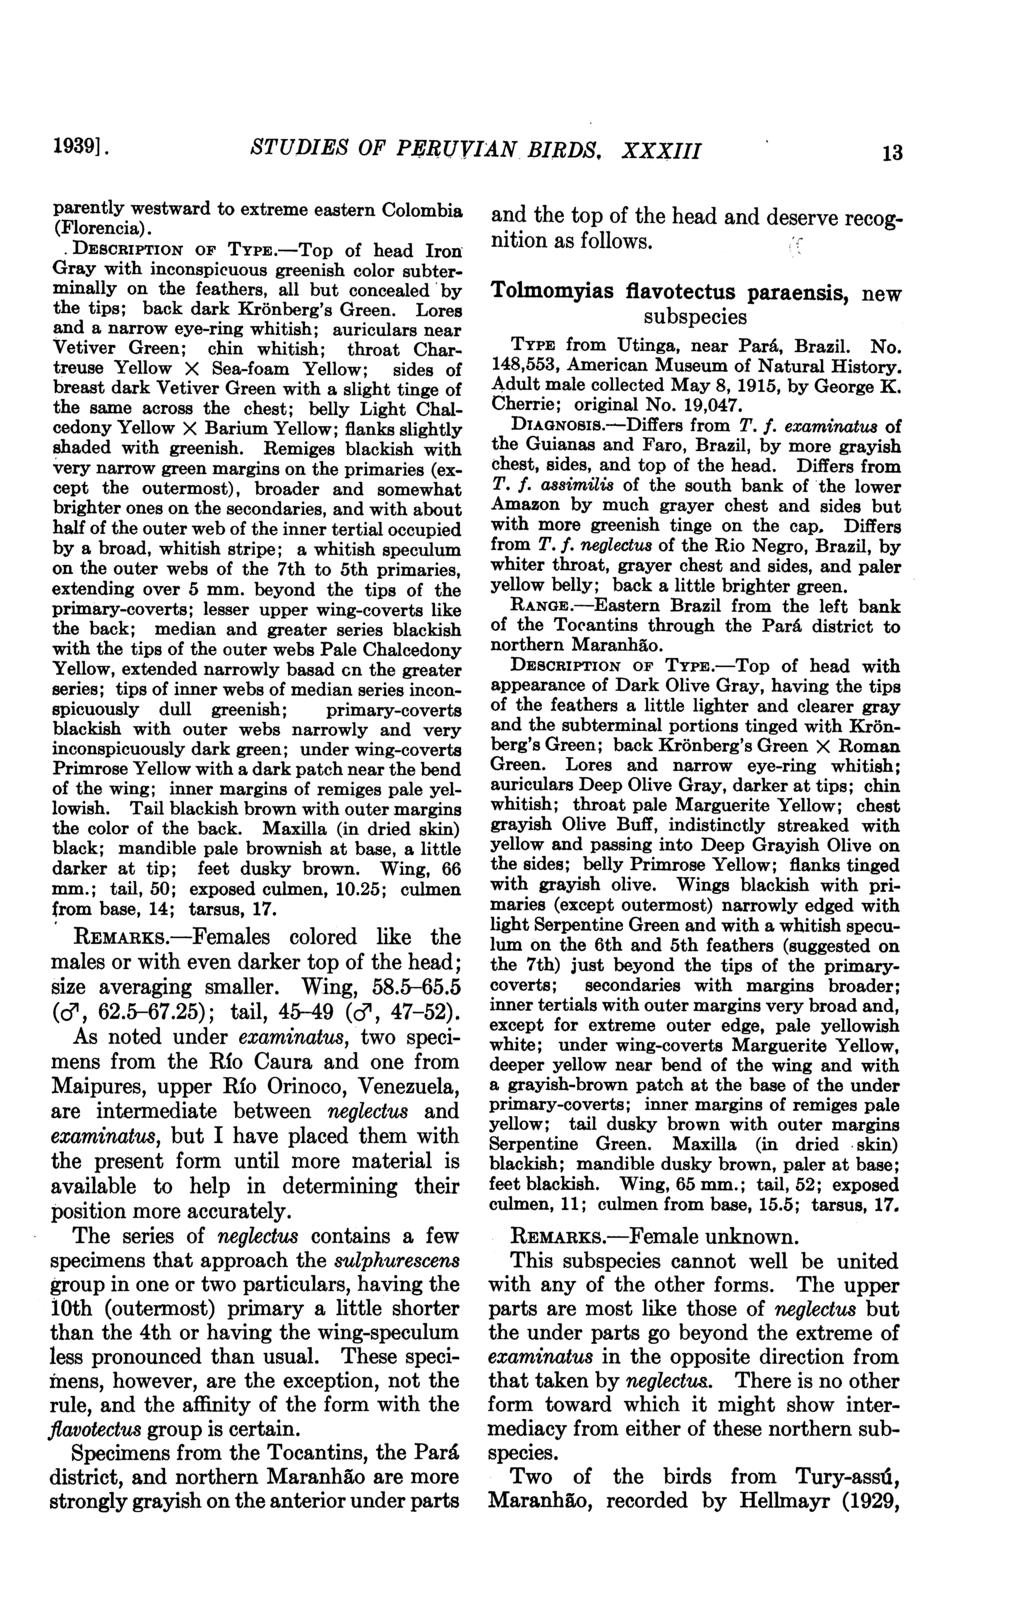 1939]. STUDIES OF PENRUVIAN BIRDS, XXXIII 13 parently westward to extreme eastern Colombia (Florencia).,DESCRIPTION OF TYPE.